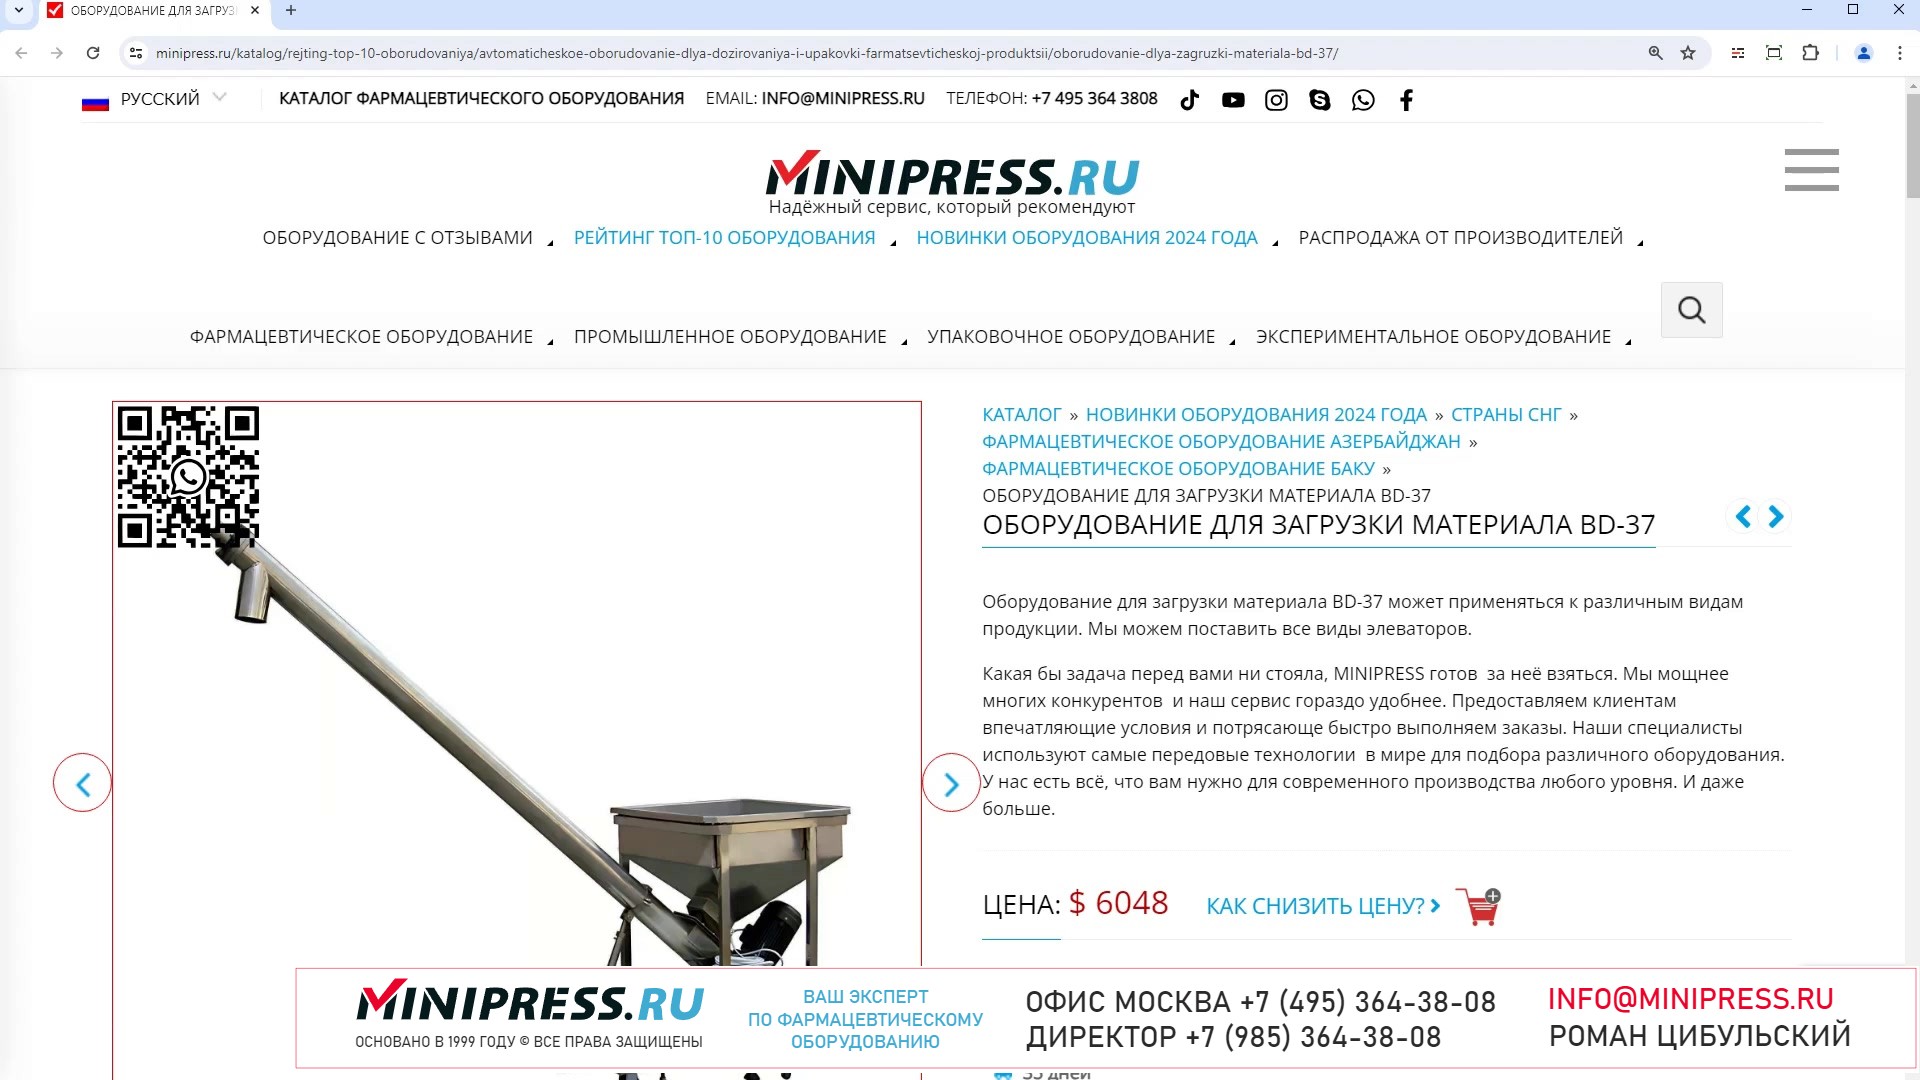 Minipress.ru Оборудование для загрузки материала BD-37